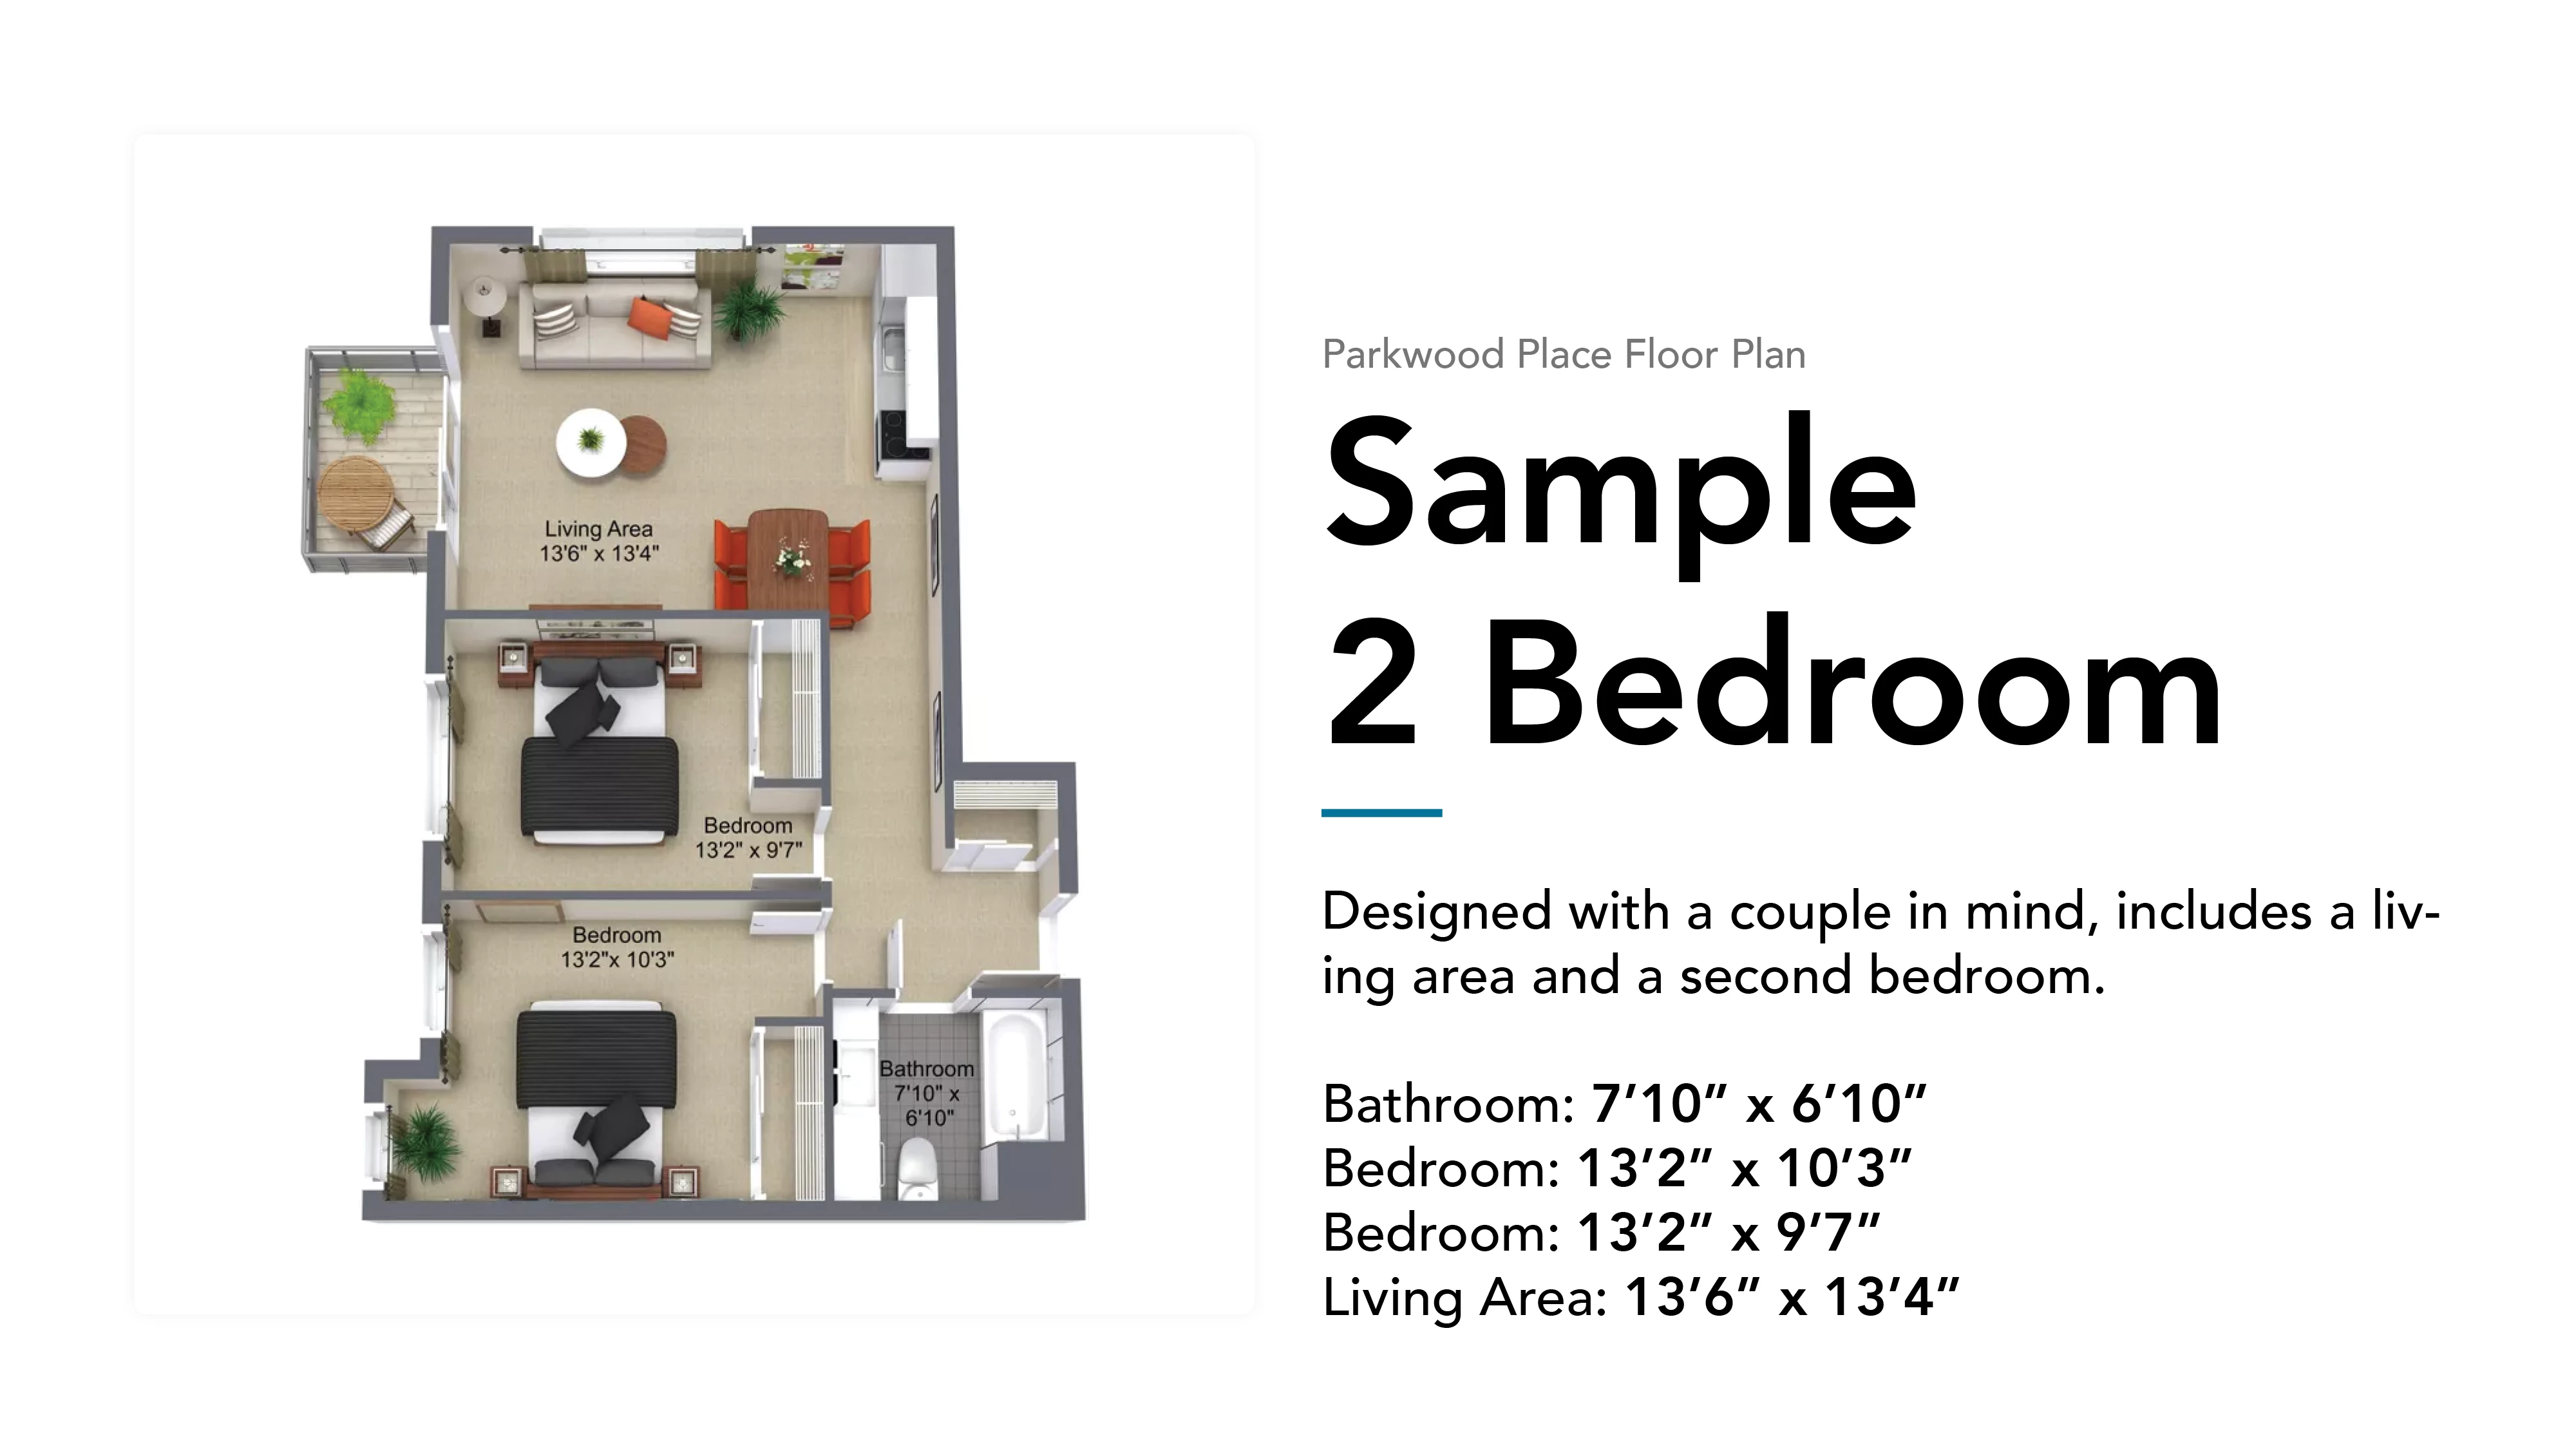 parkwood place sample 2 bedroom floor plan